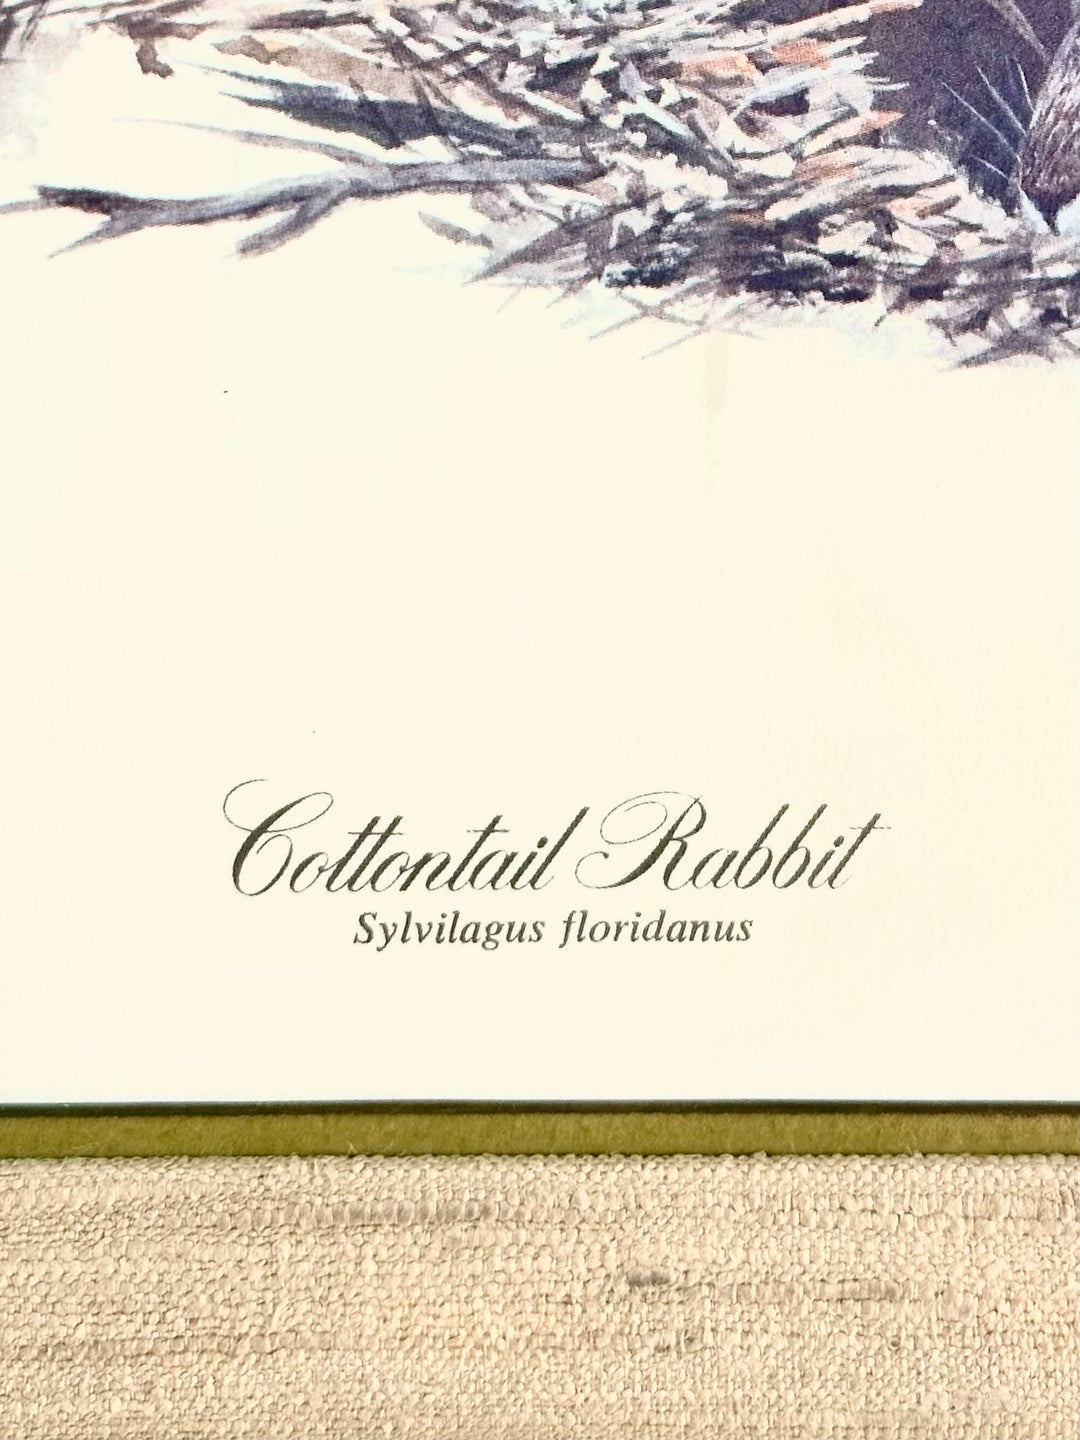 Ray Harm Original Framed Print, Cottontail Rabbit